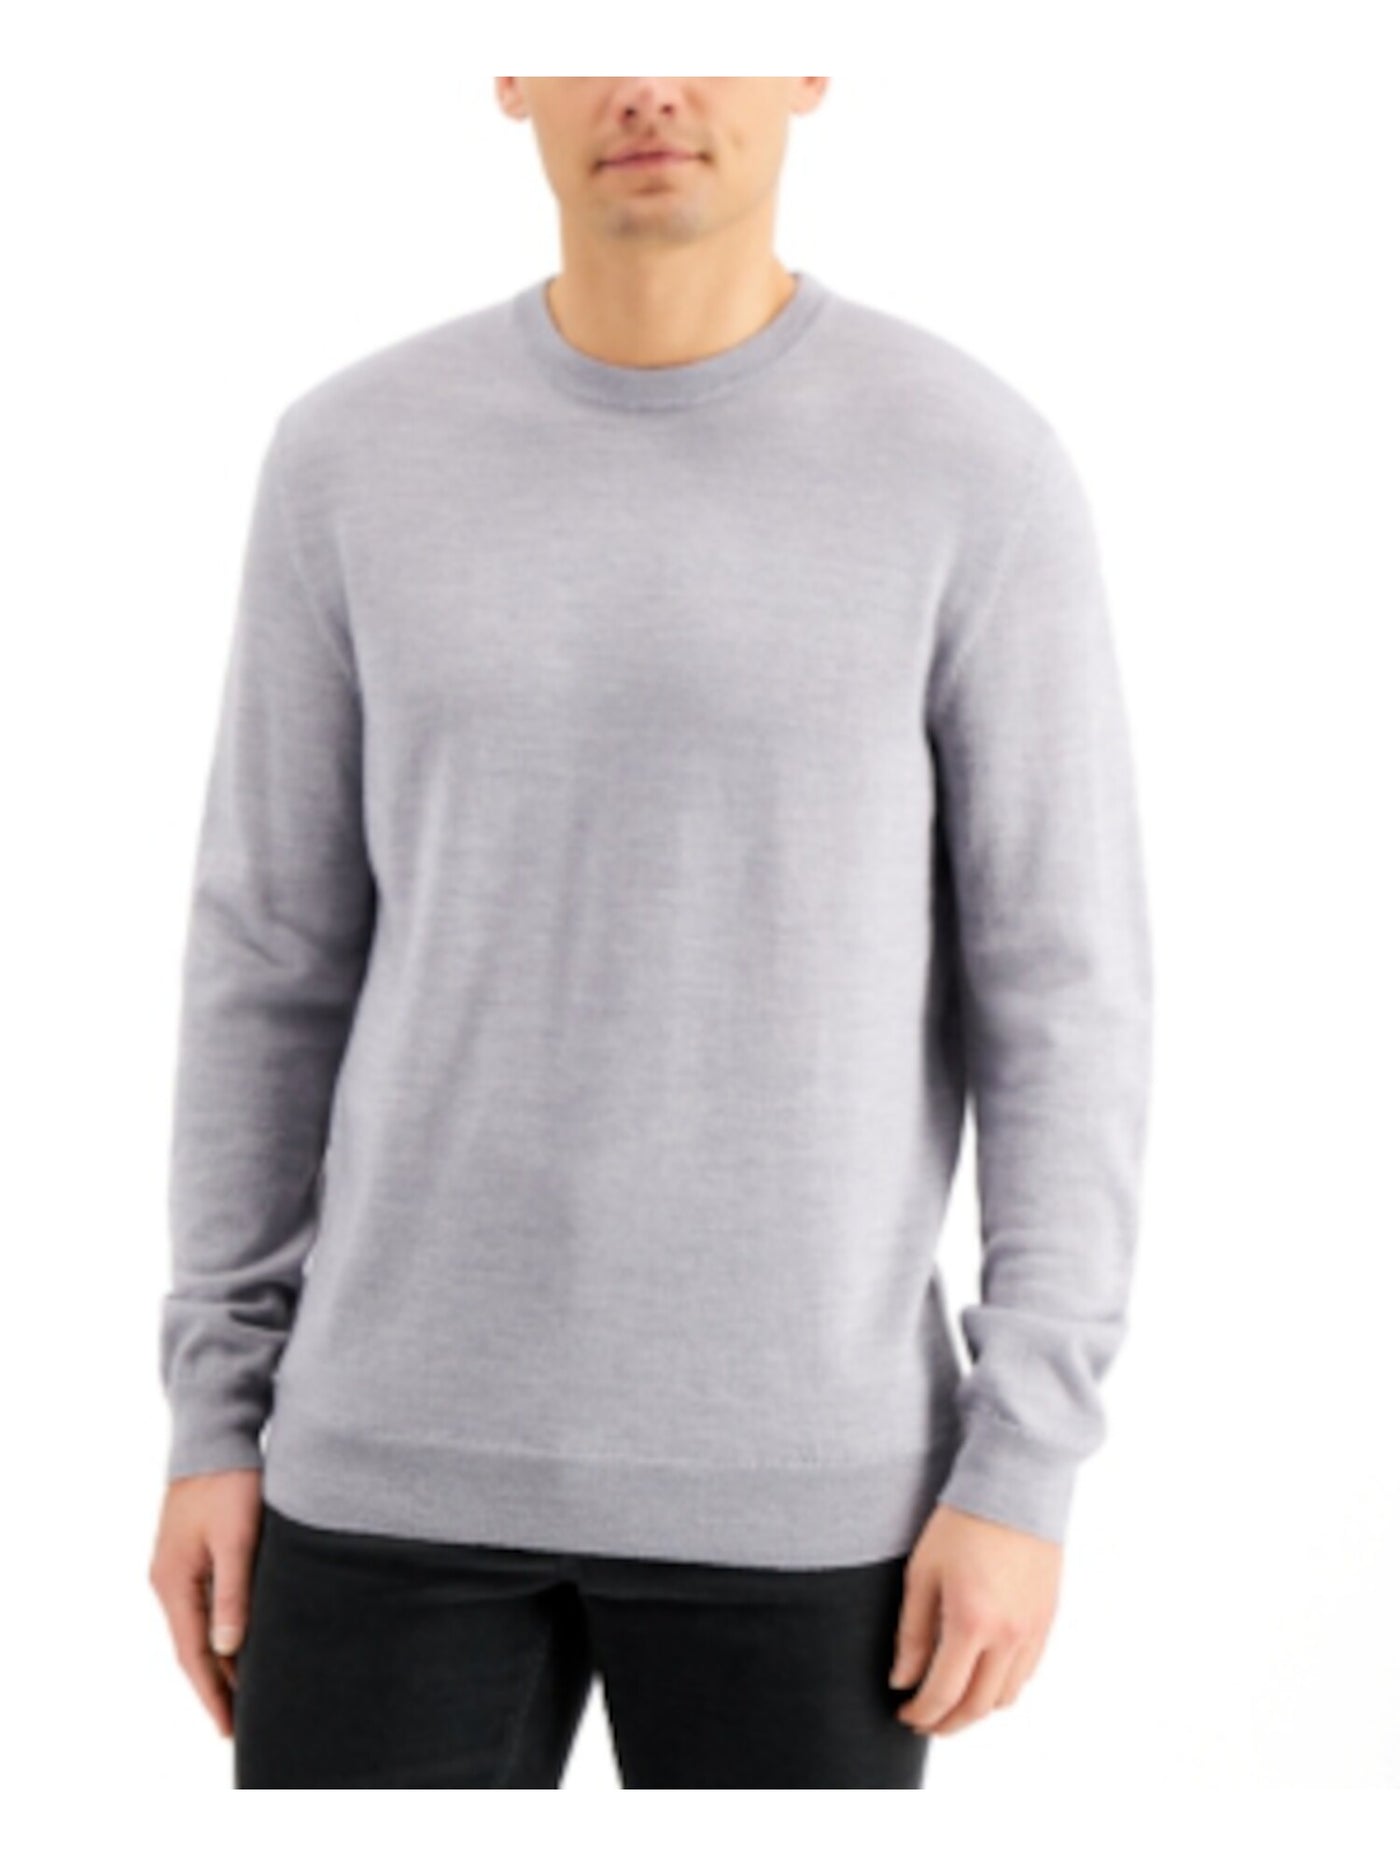 CLUBROOM Mens Gray Crew Neck Pullover Sweater XXL